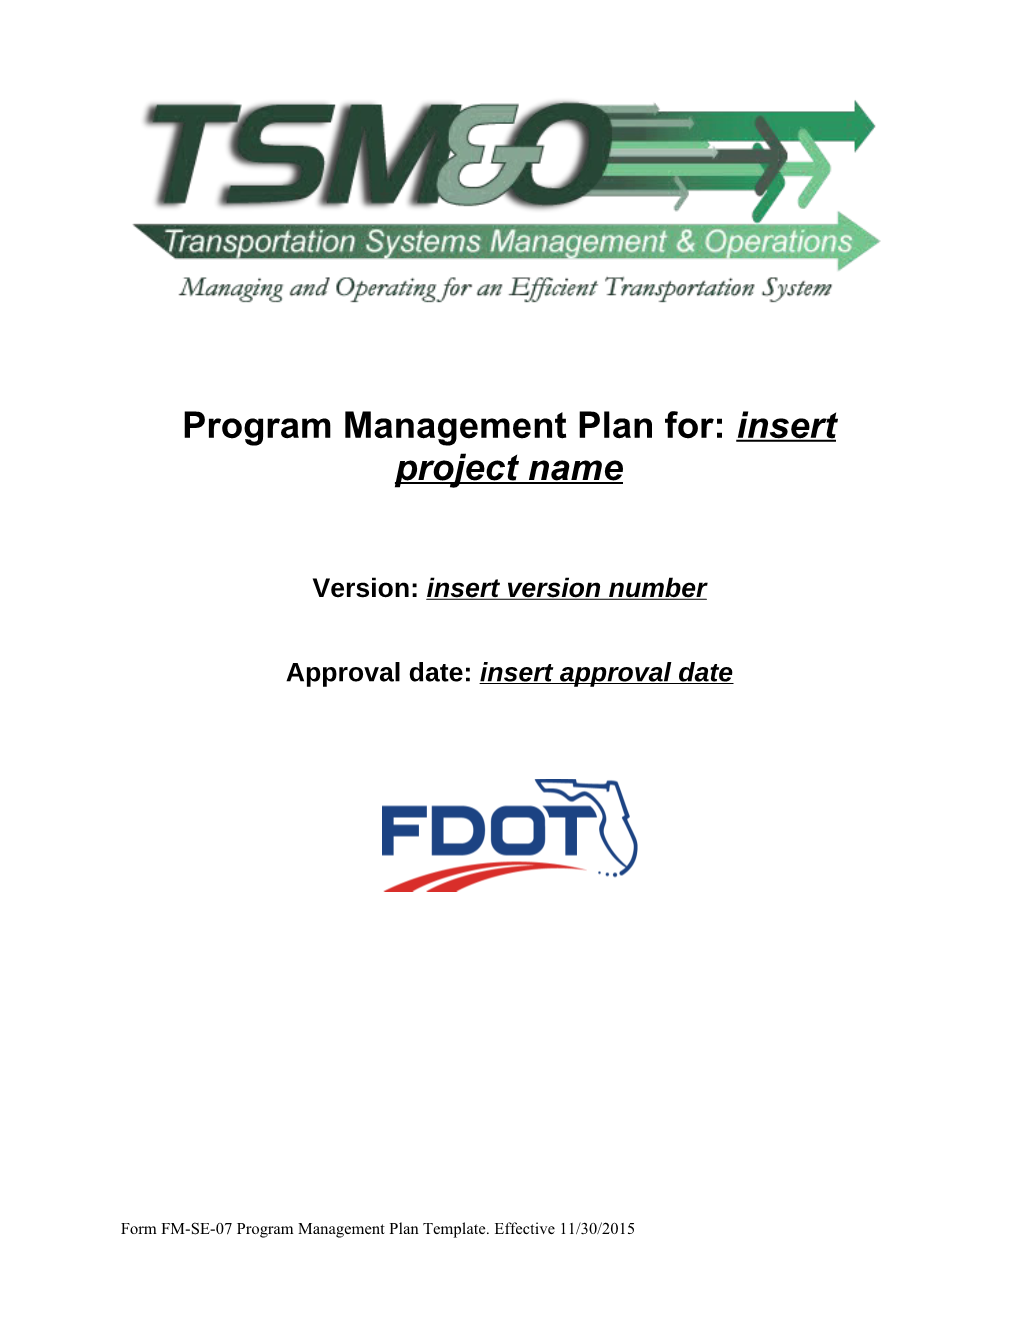 Program Management Plan For: Insert Project Name